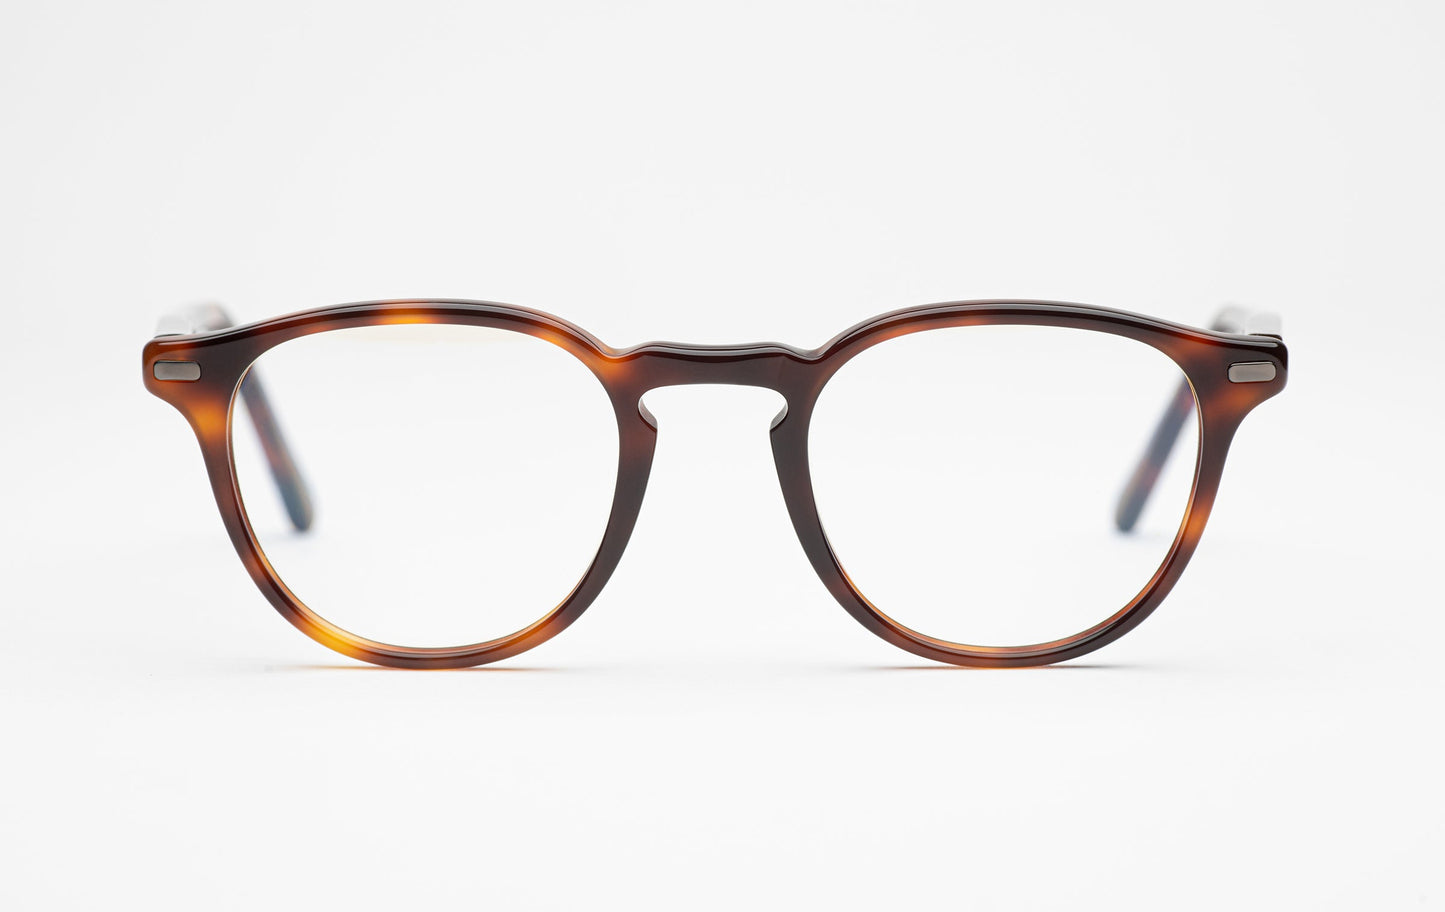 The Sage 3 | Acetate Round Frame Glasses - Designer Prescription – Tortoiseshell Acetate